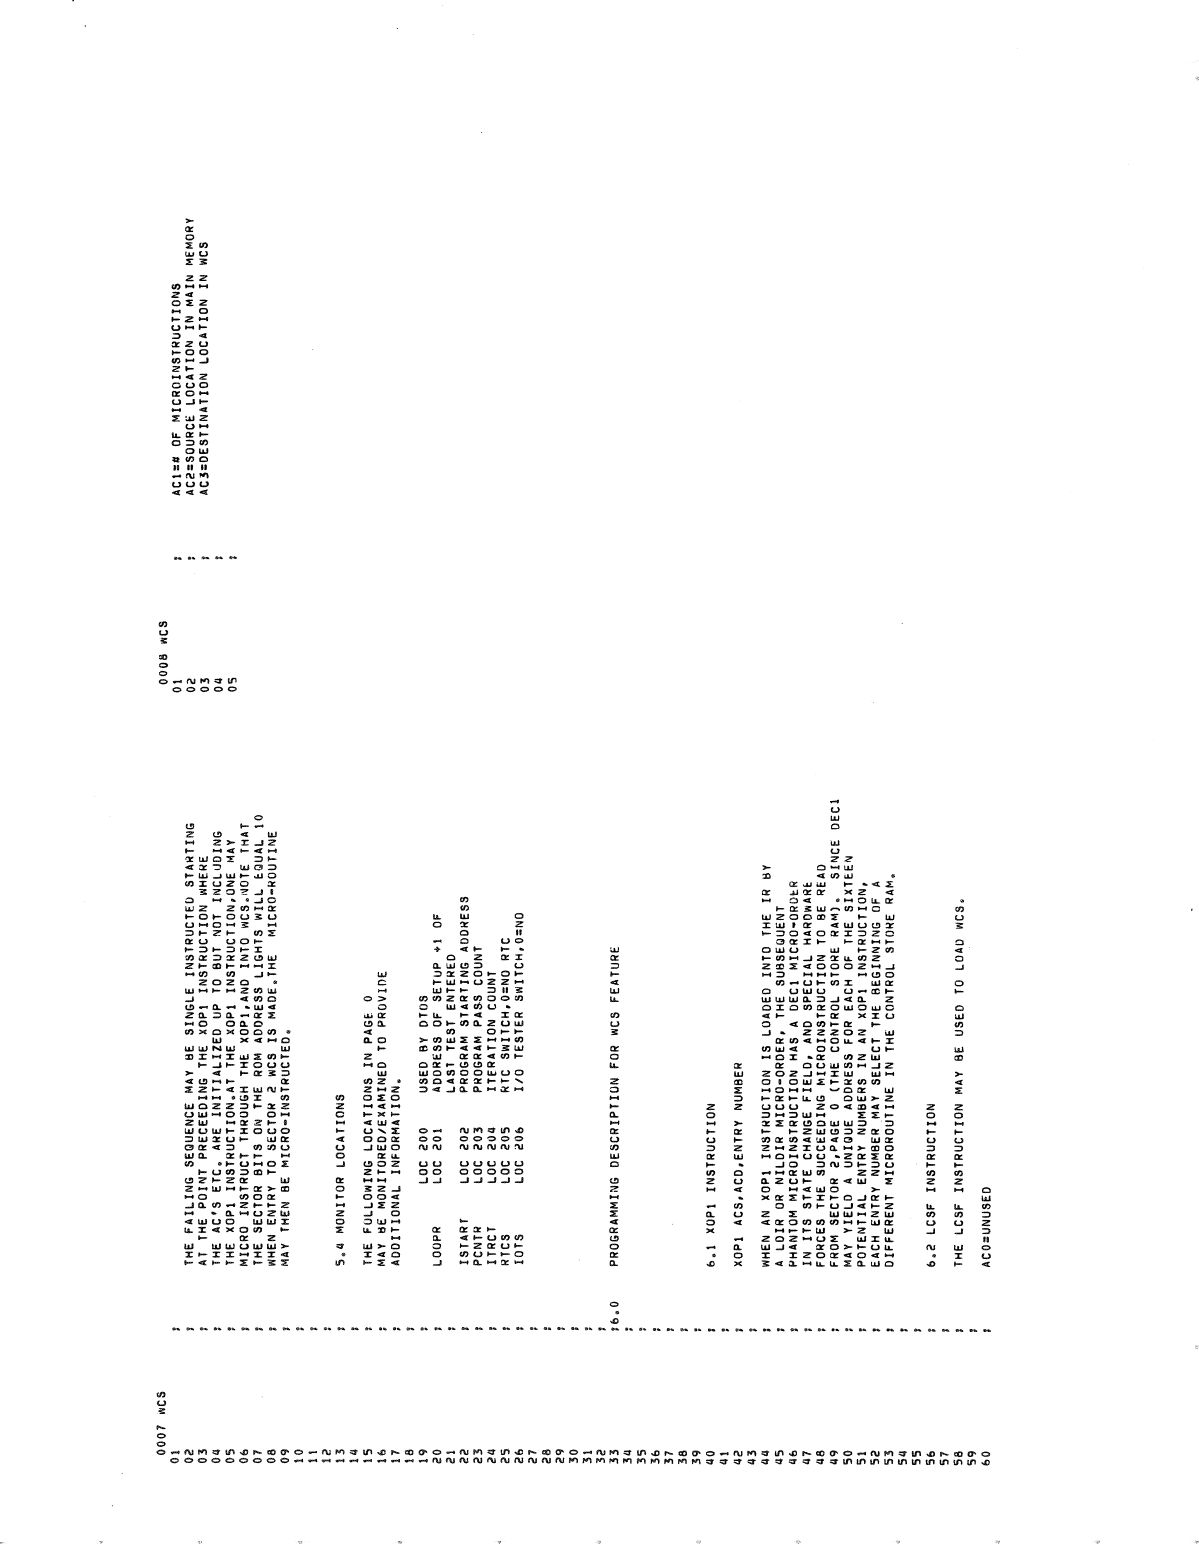 Page 5 of 10 - PDF Printing 600 Dpi 068-000516-01_s-130-writable-control-store-diag-part-4 068-000516-01 S-130-writable-control-store-diag-part-4